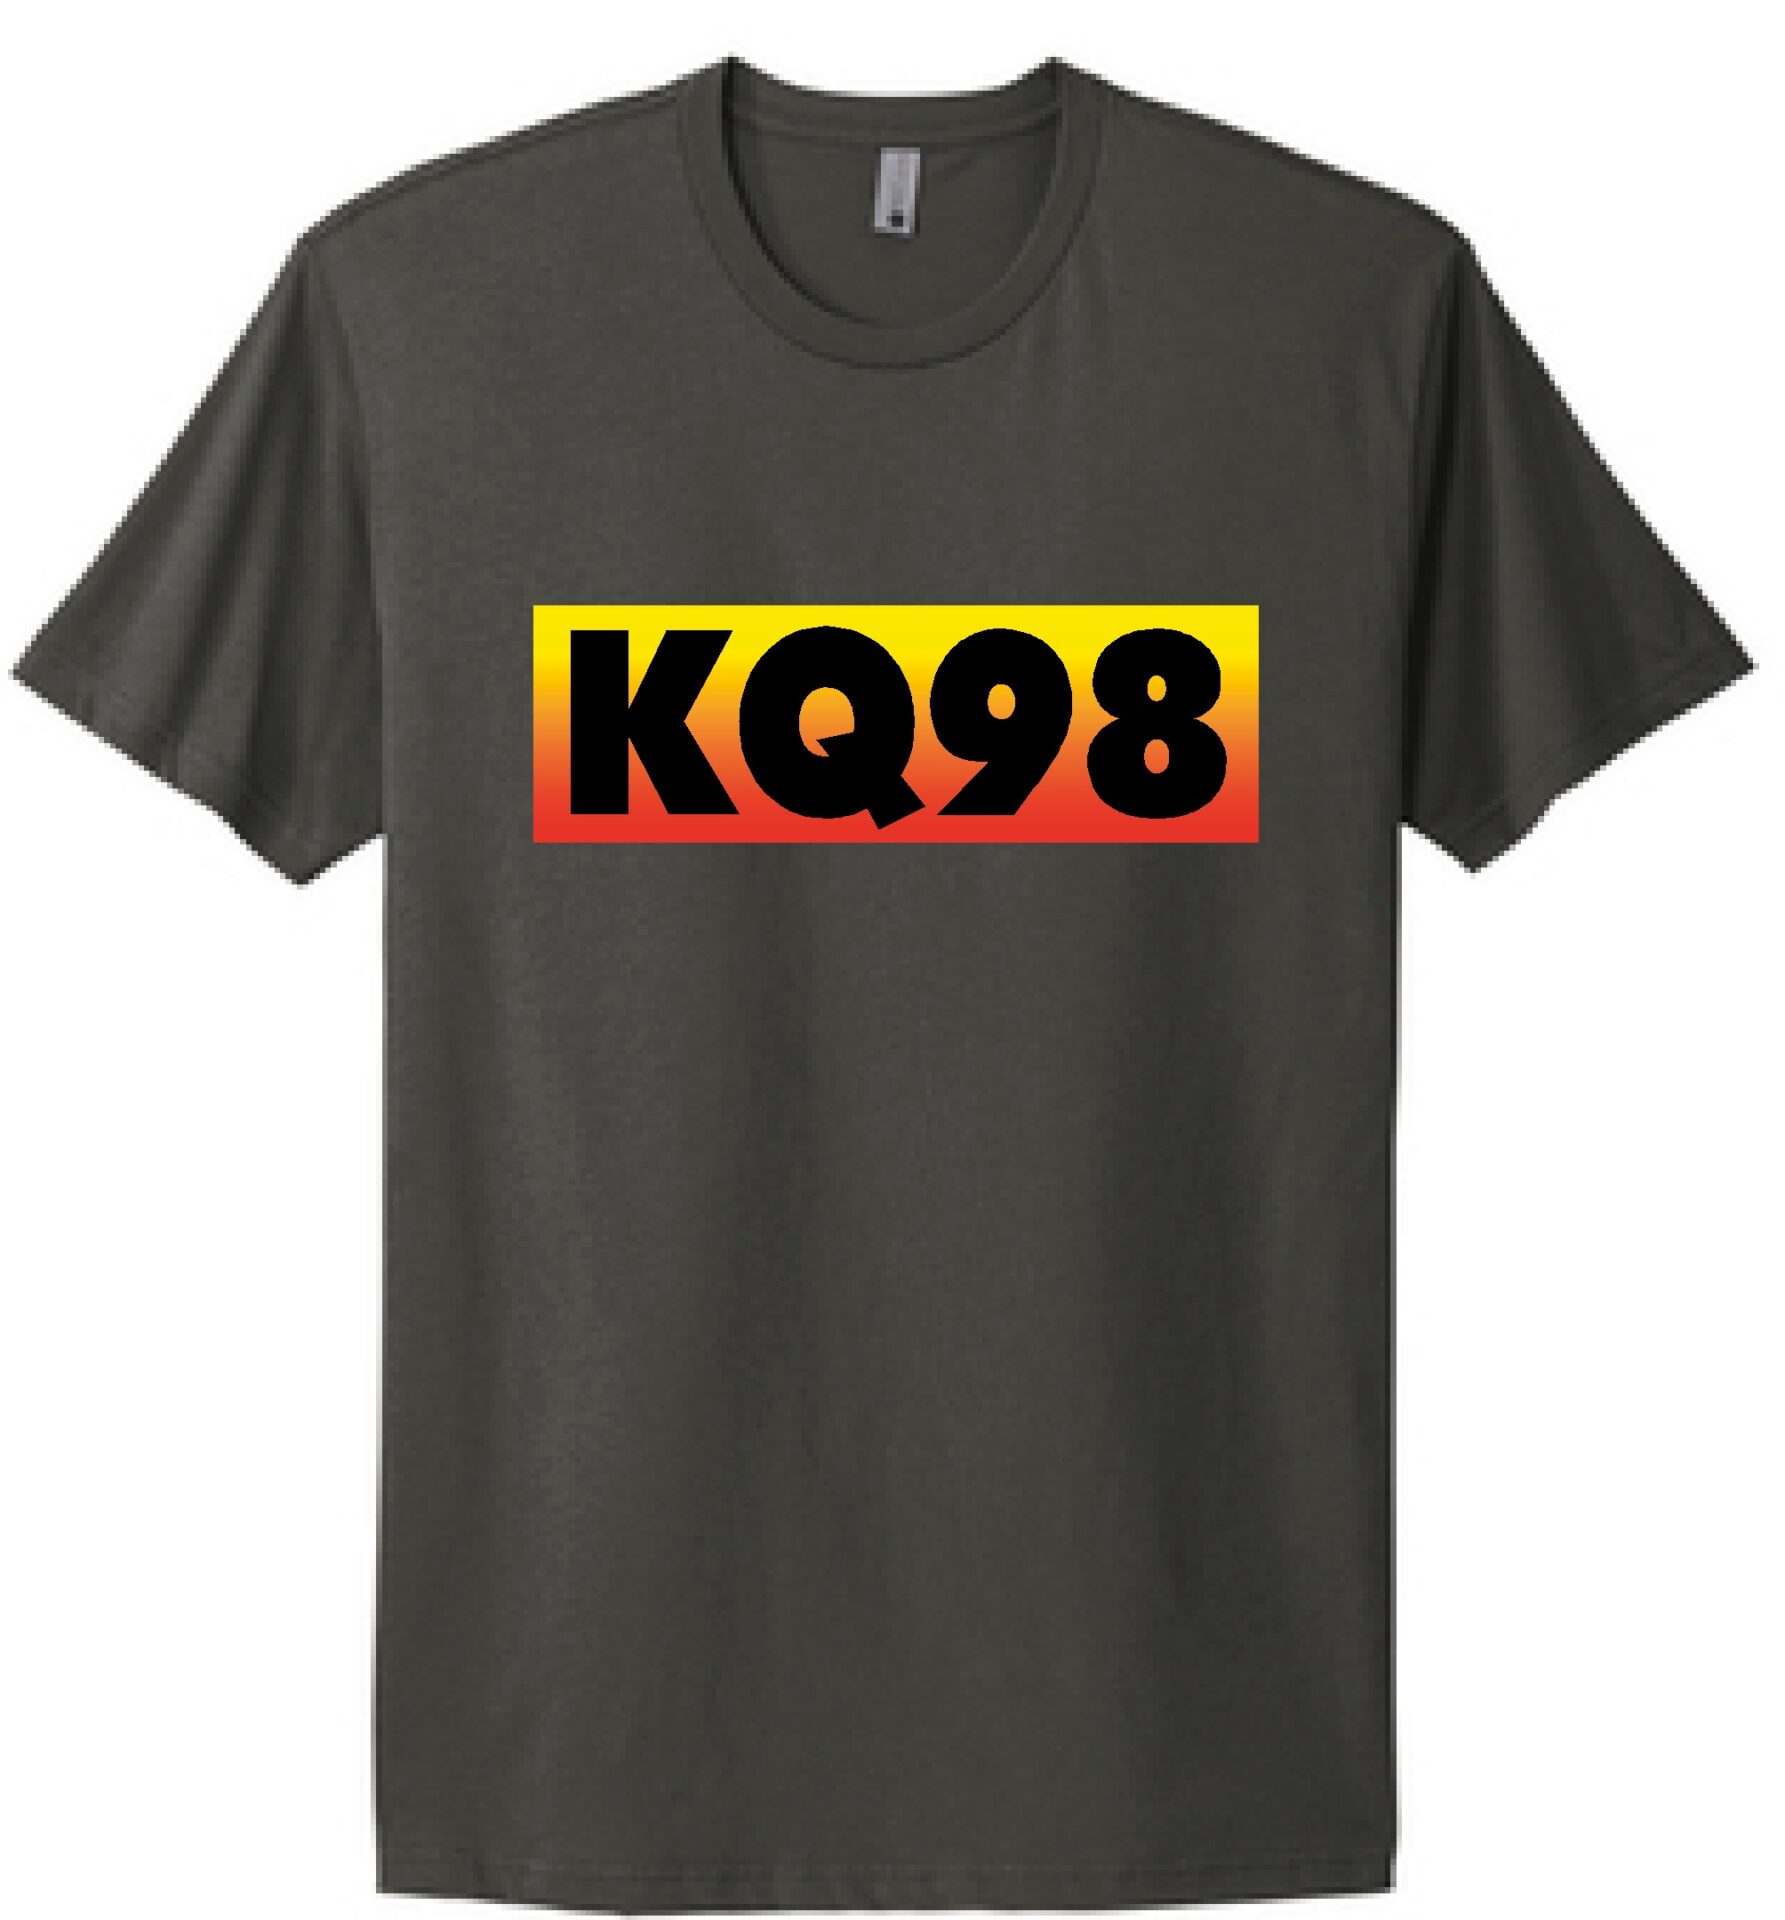 KQ98 logo on a grey shirt